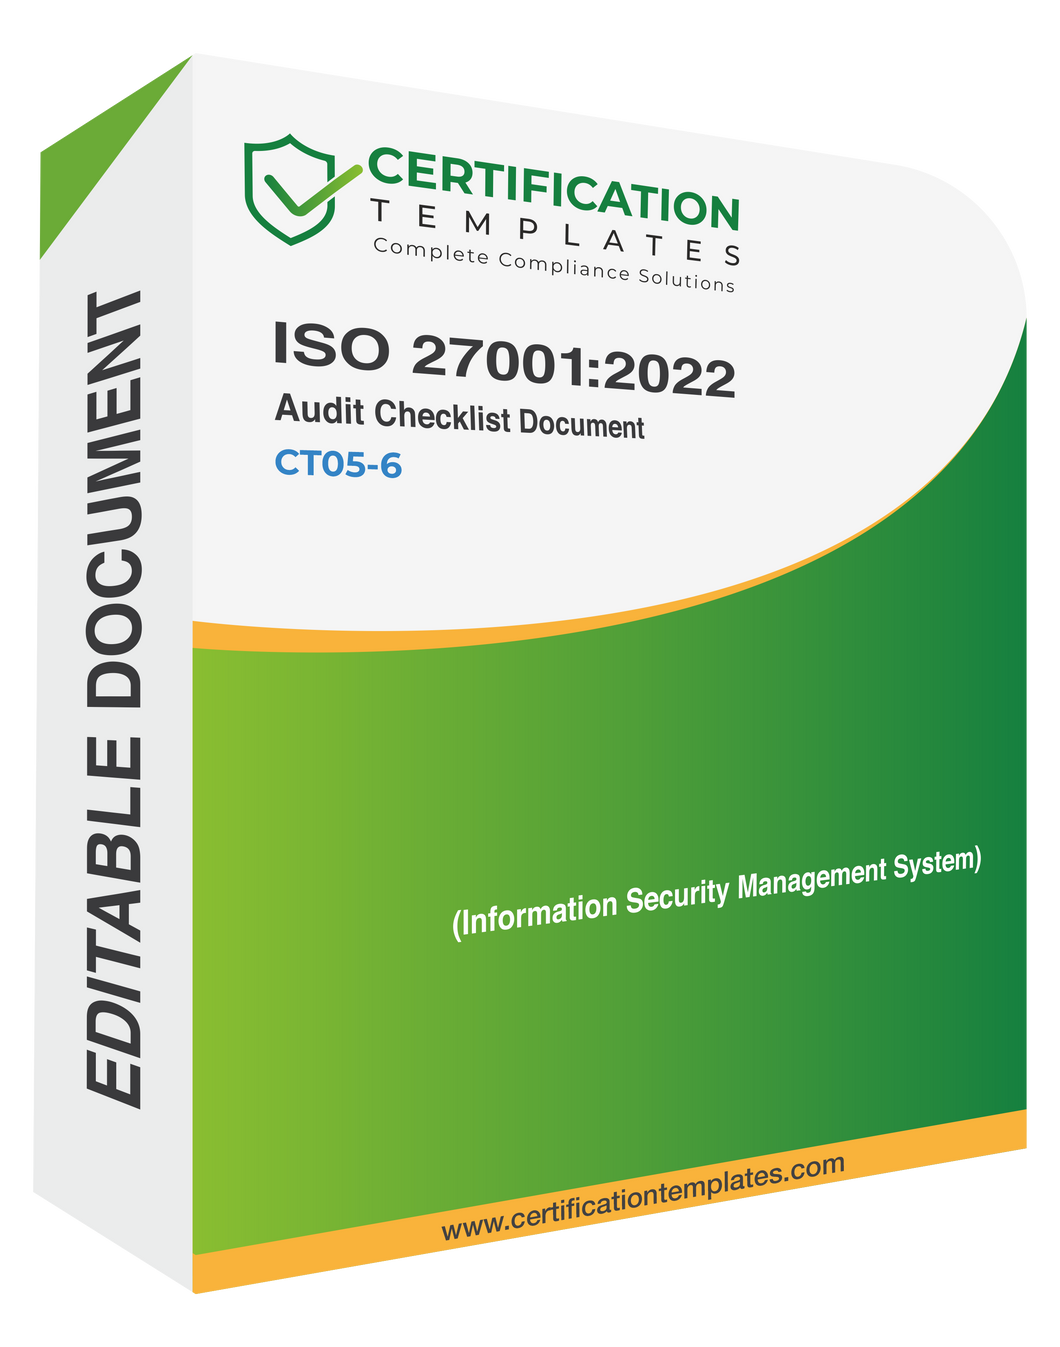 ISO 27001 Internal Audit Checklist